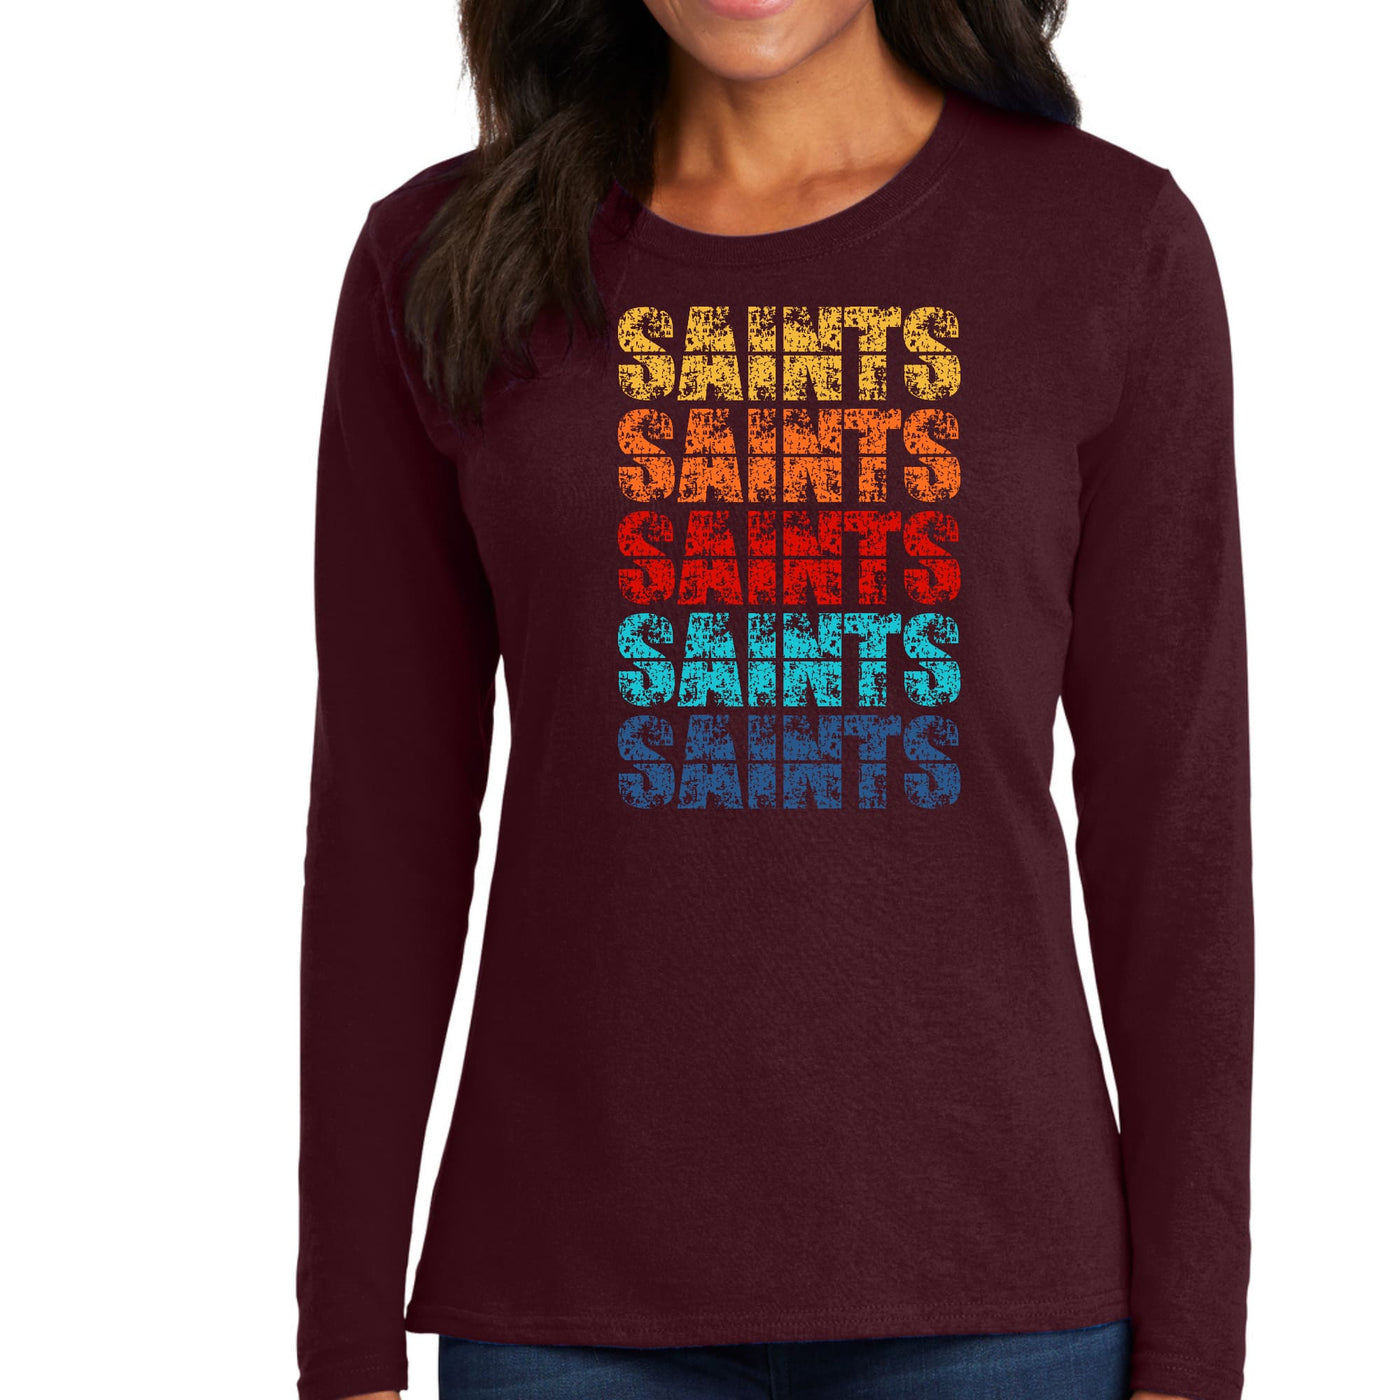 Womens Long Sleeve Graphic T-shirt Saints Colorful Art Illustration - Womens